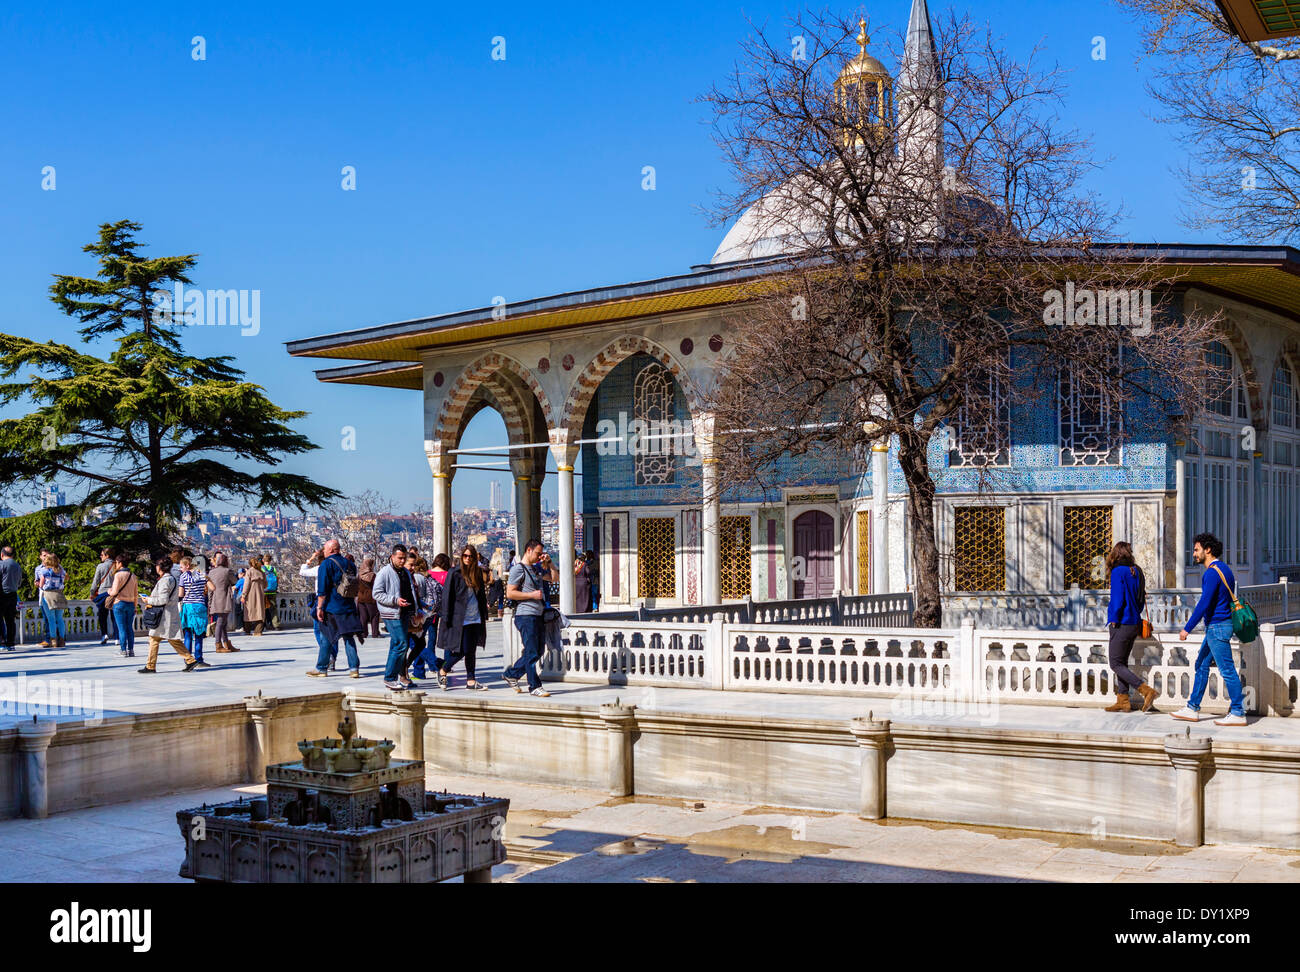 The Baghdad Kosku pavilion in the Fourth Court, Topkapi Palace (Topkapi Sarayi), Istanbul,Turkey Stock Photo